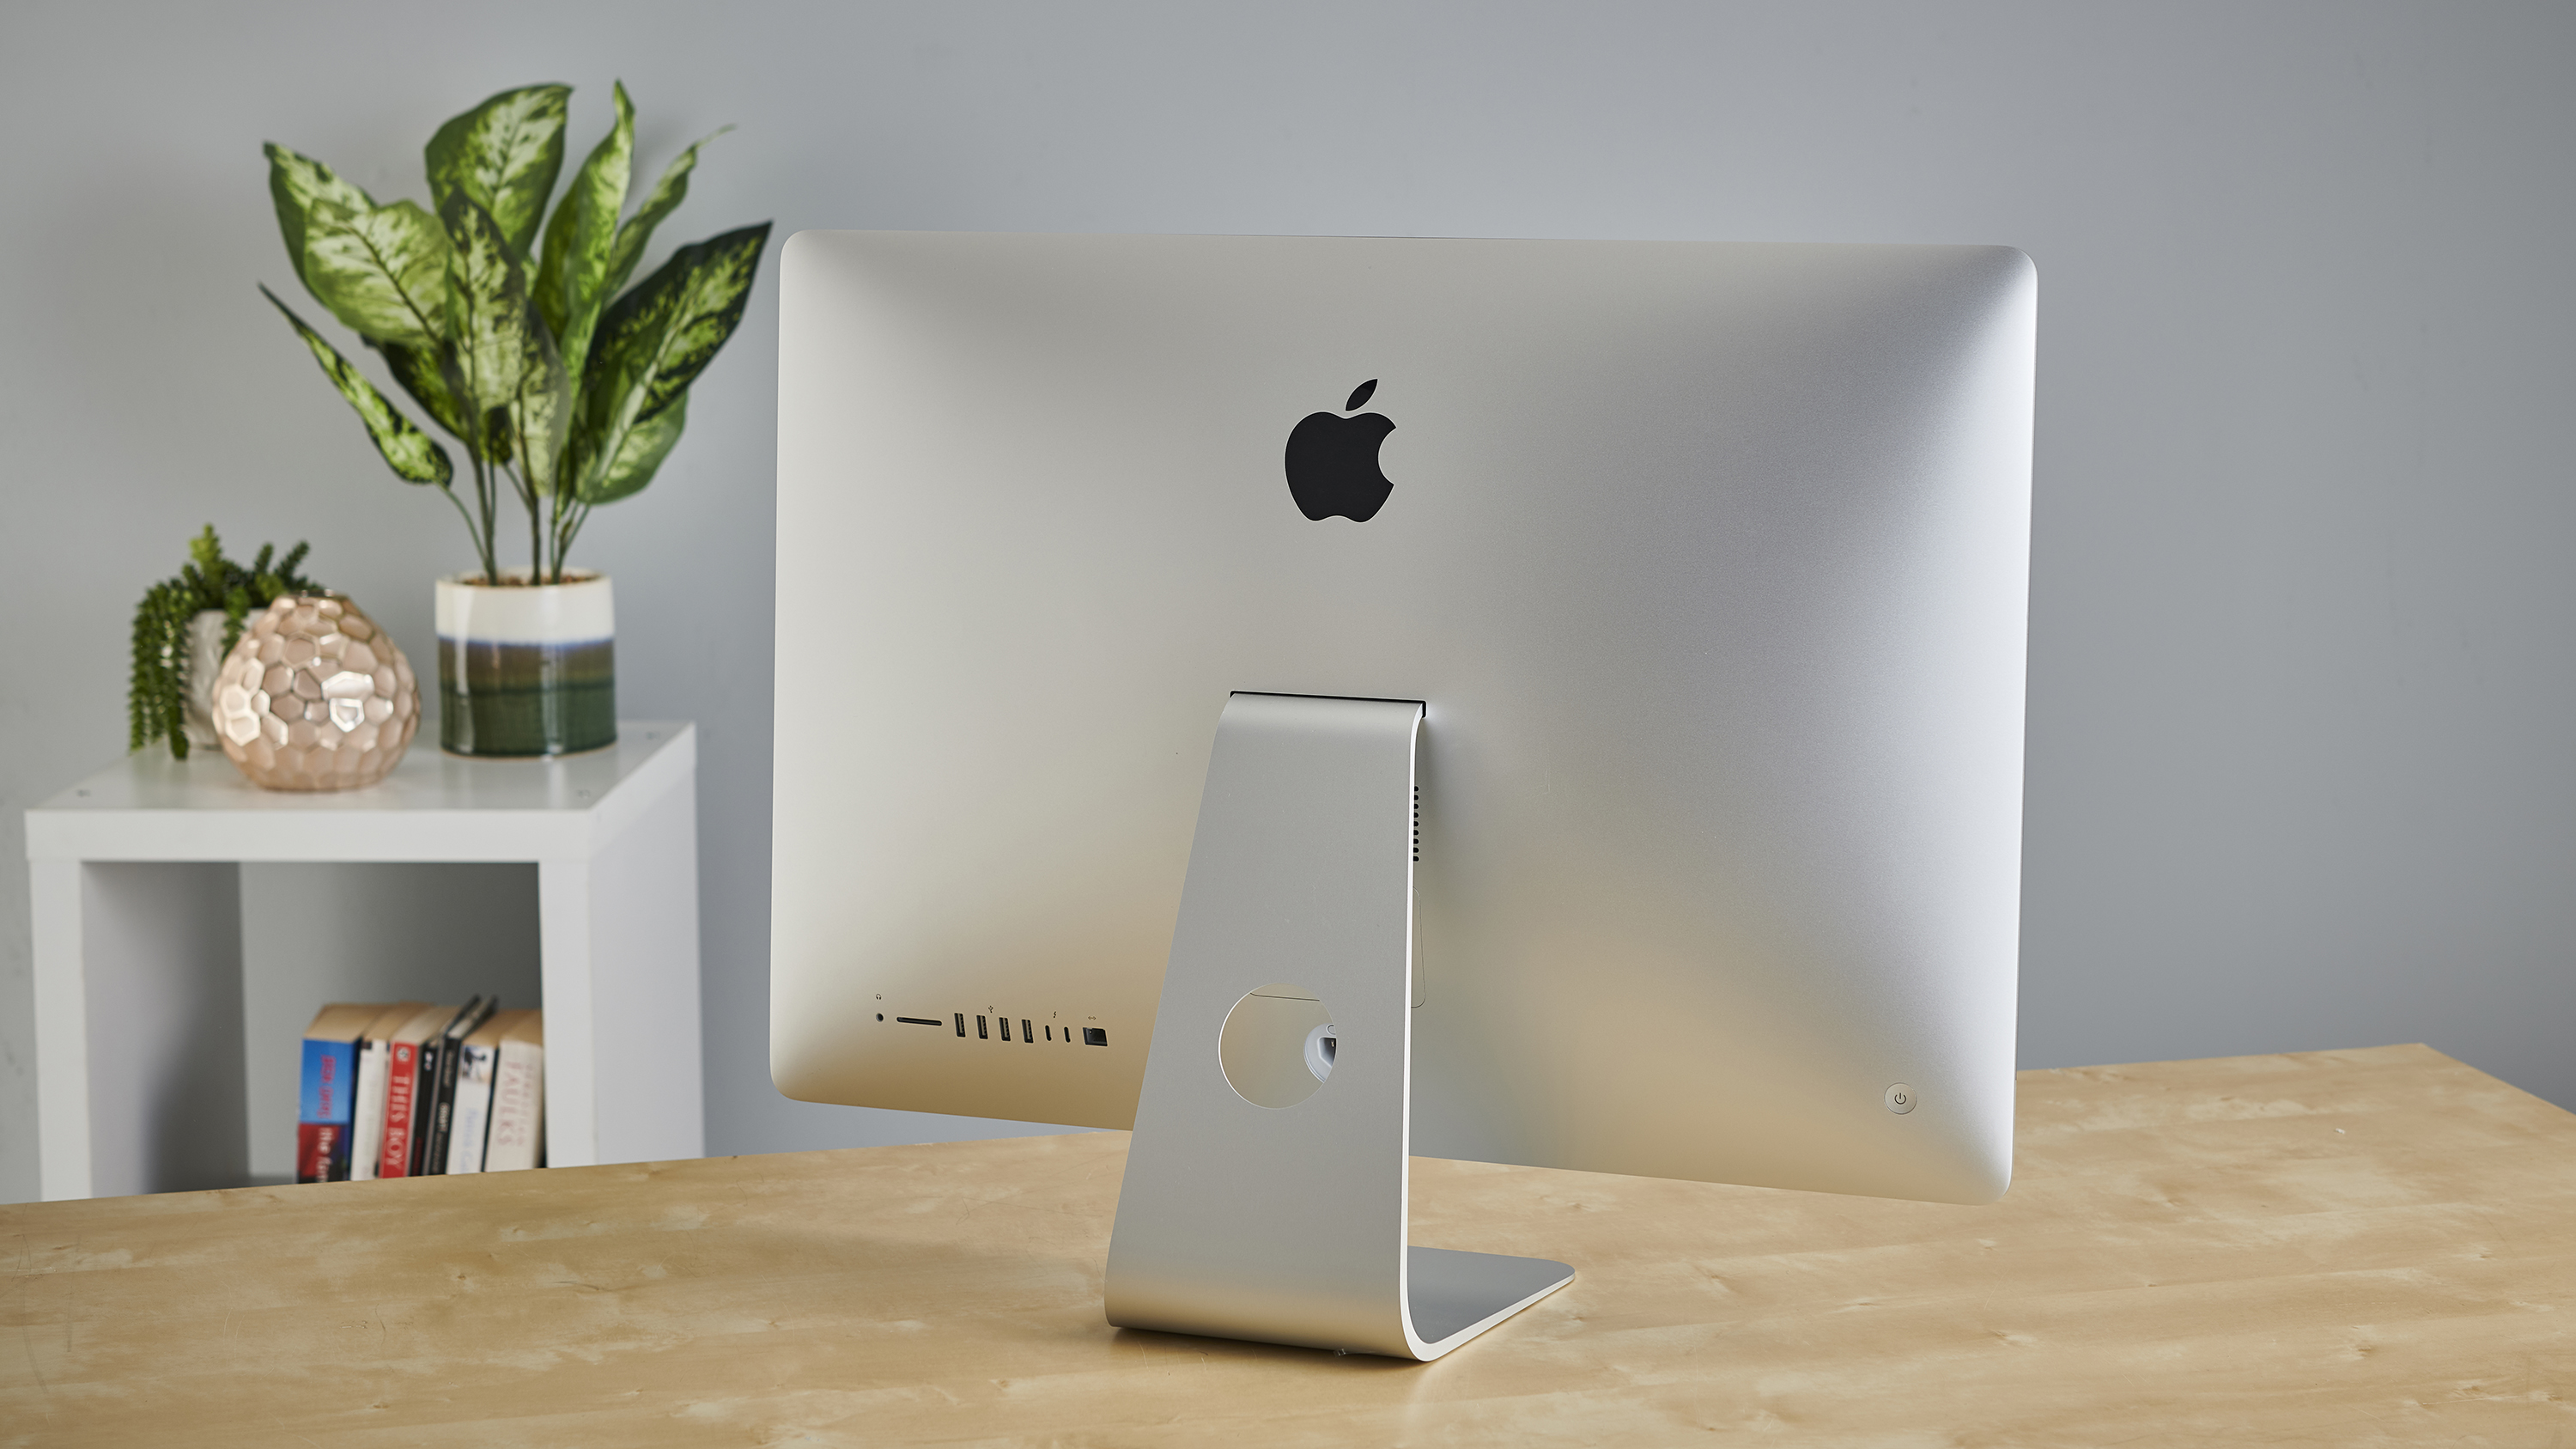 Apple iMac 27-inch (2020) on a wooden desk